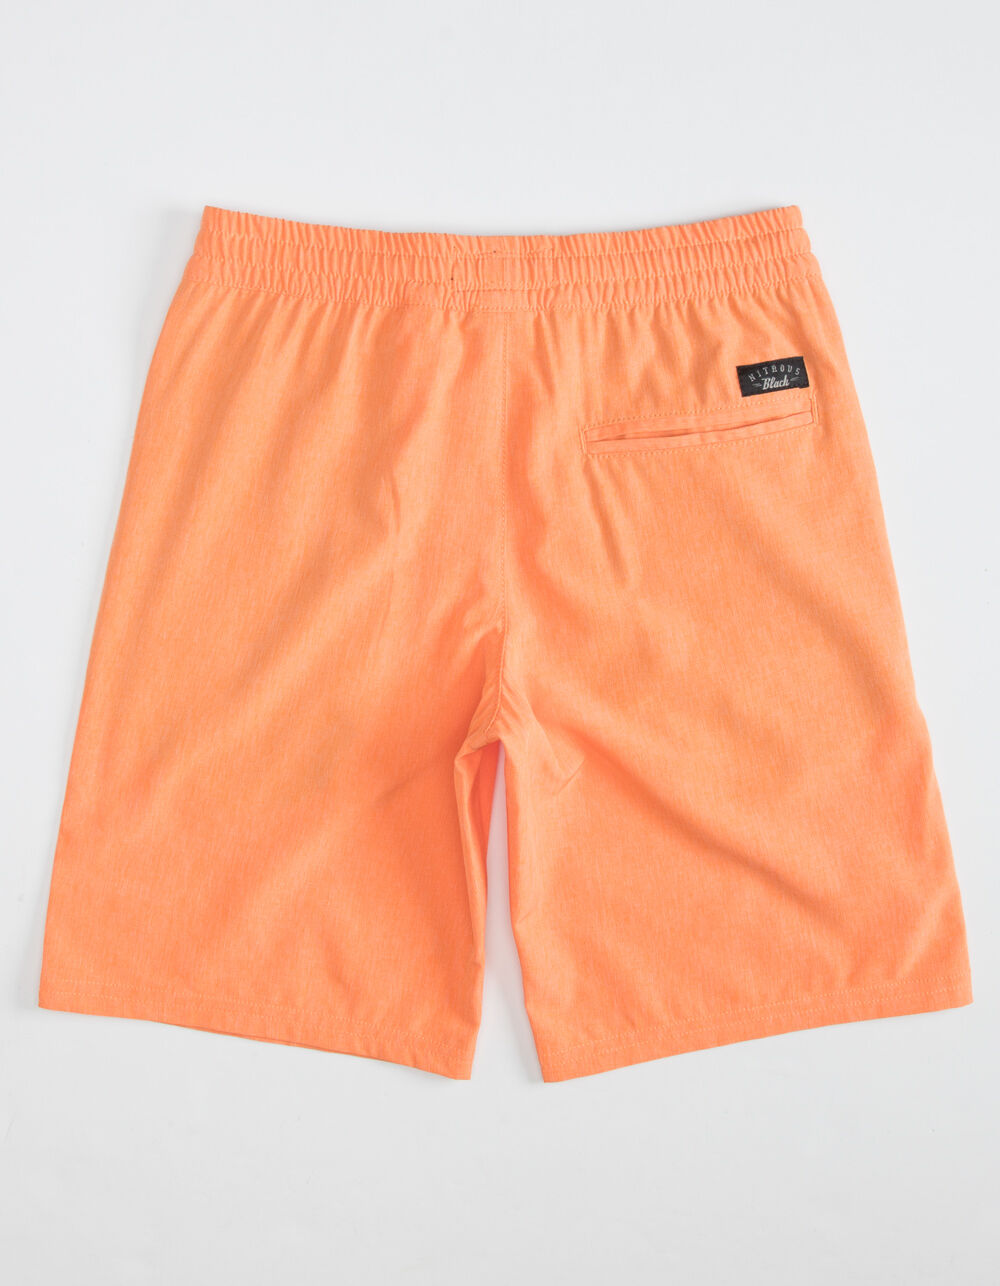 NITROUS BLACK Pull On Boys Neon Orange Hybrid Shorts - NEON ORANGE | Tillys